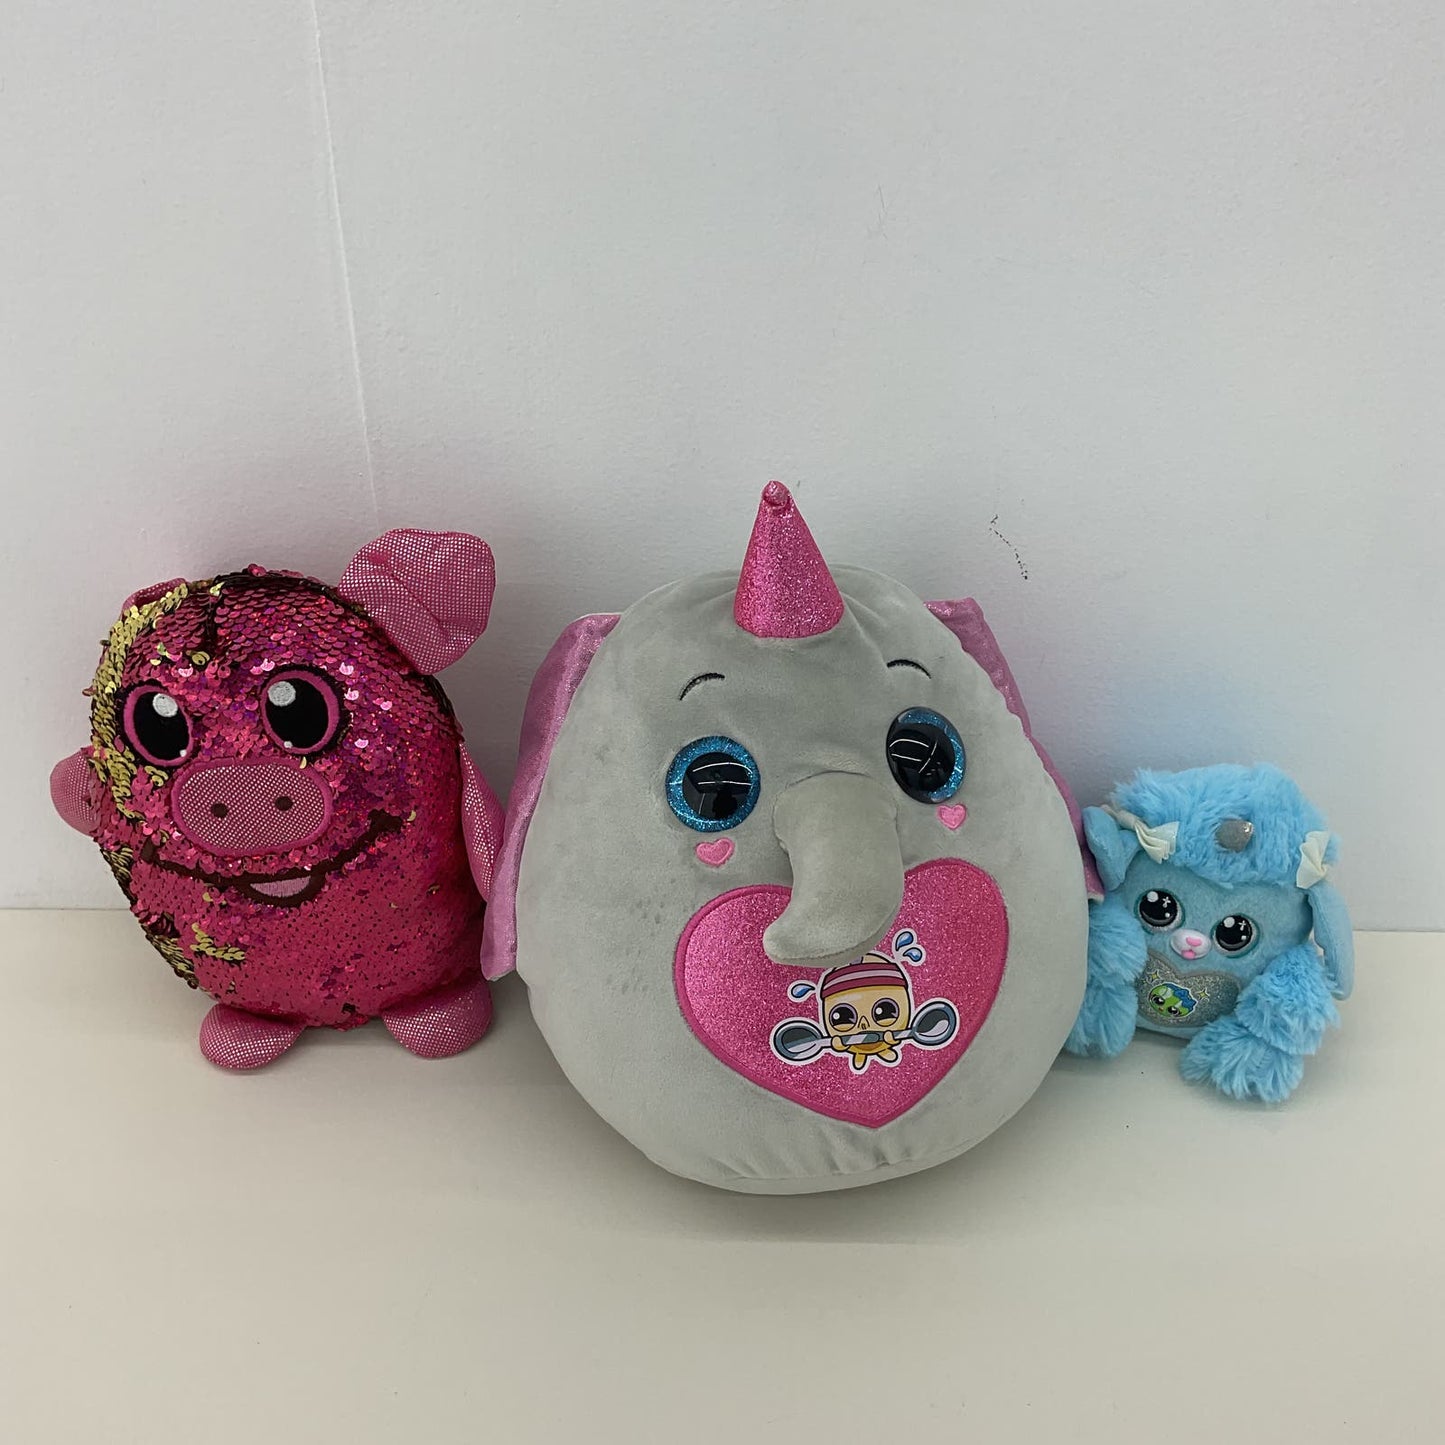 Preowned Shimmeez LOT Sequin Pig Blue Mini Cat & Gray Unicorn Elephant Plush - Warehouse Toys